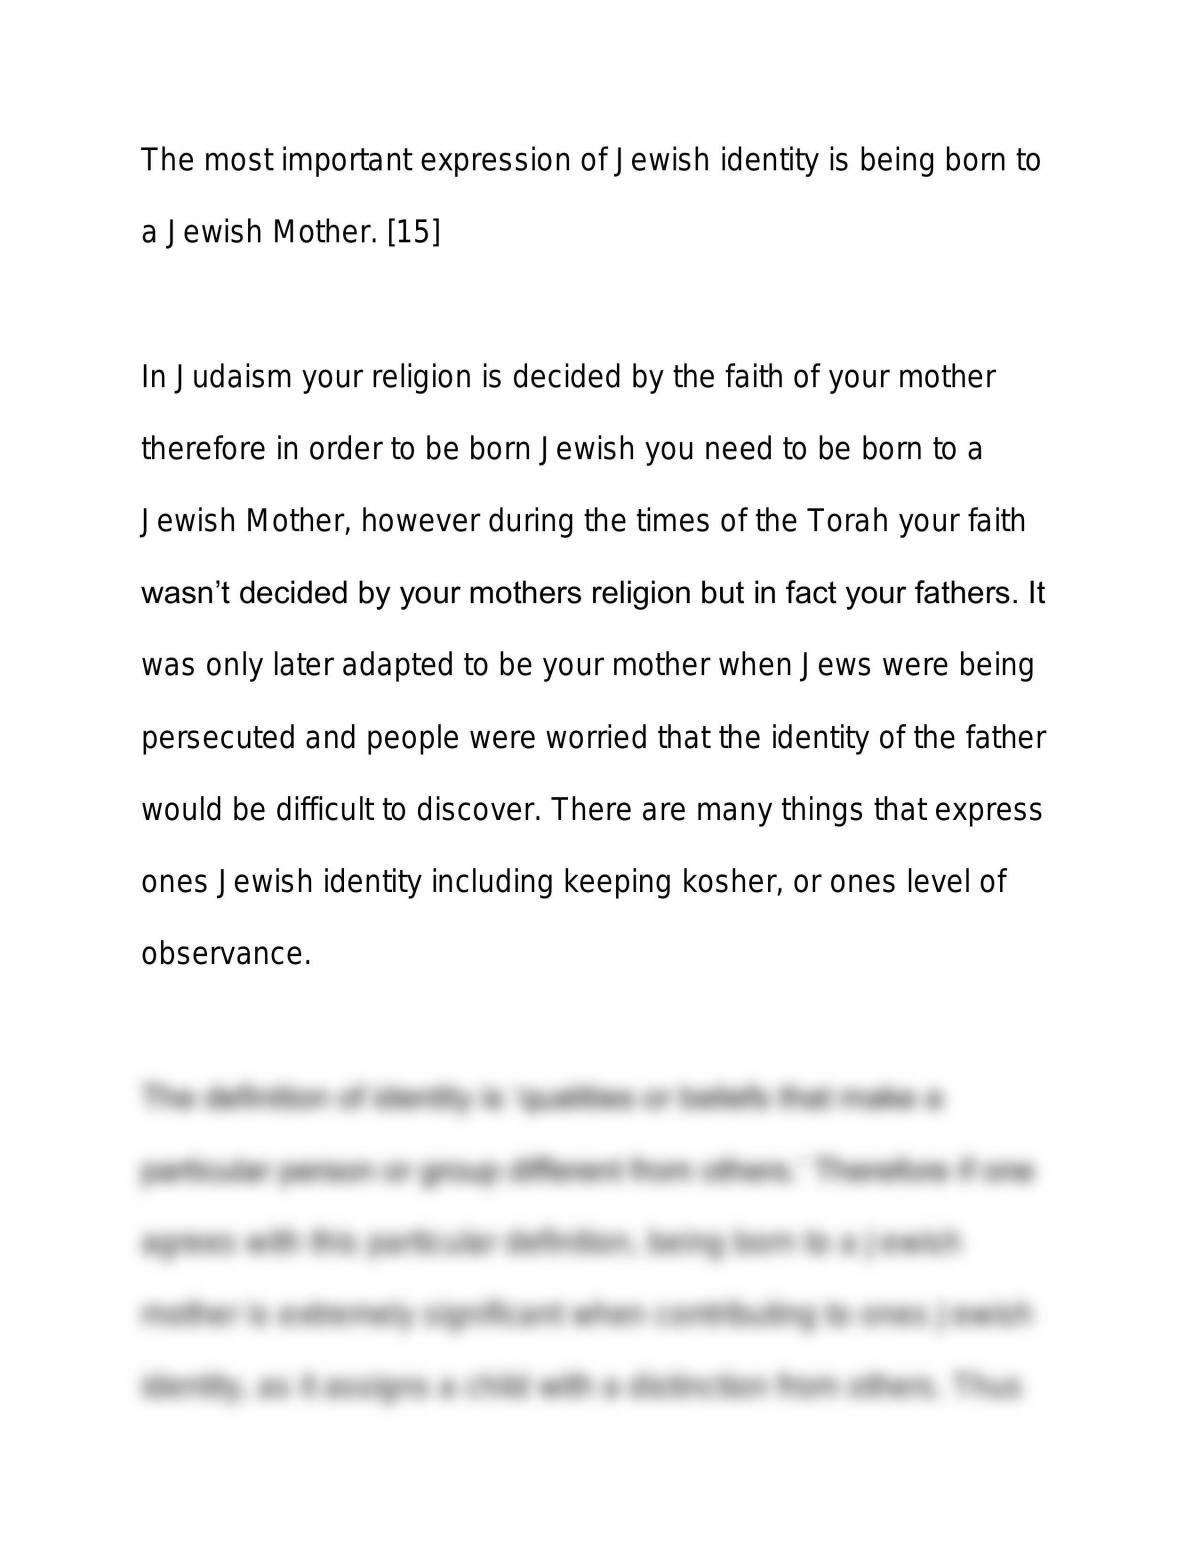 judaism essay introduction